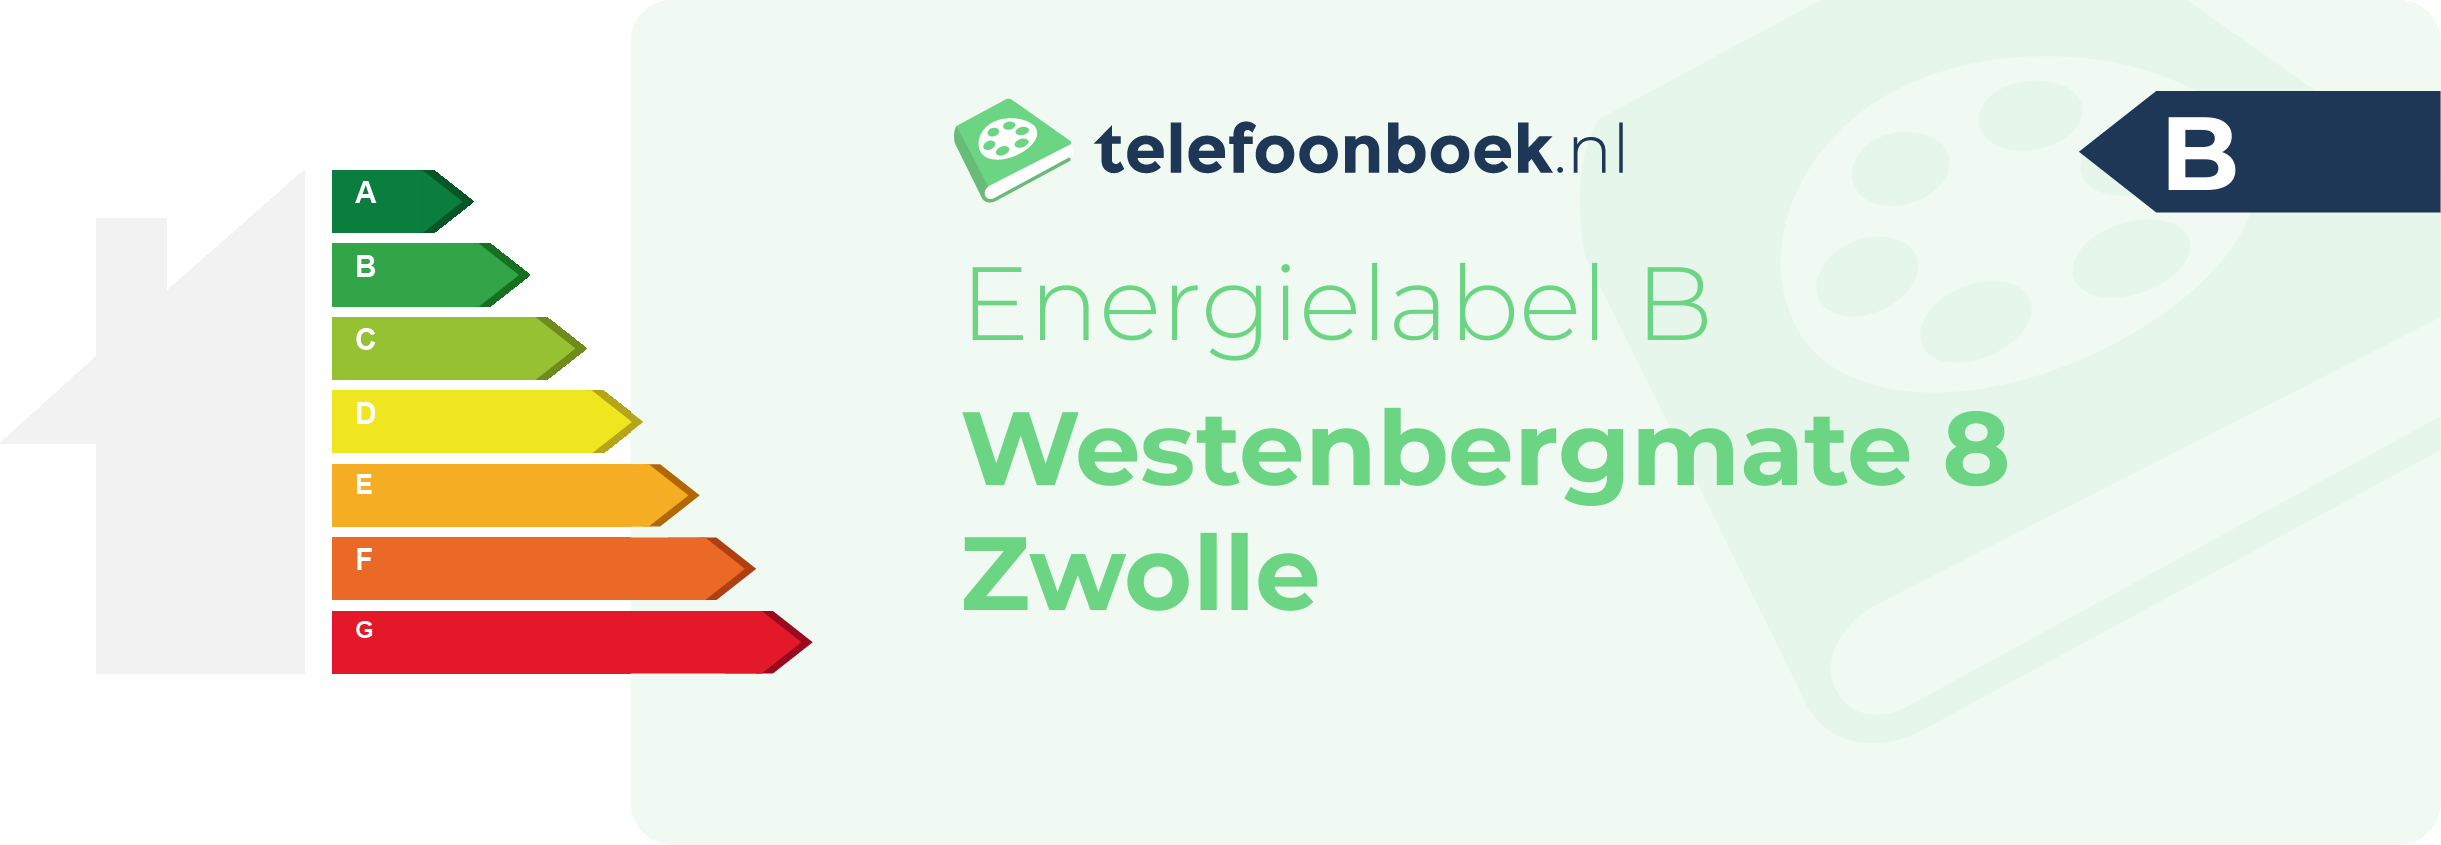 Energielabel Westenbergmate 8 Zwolle